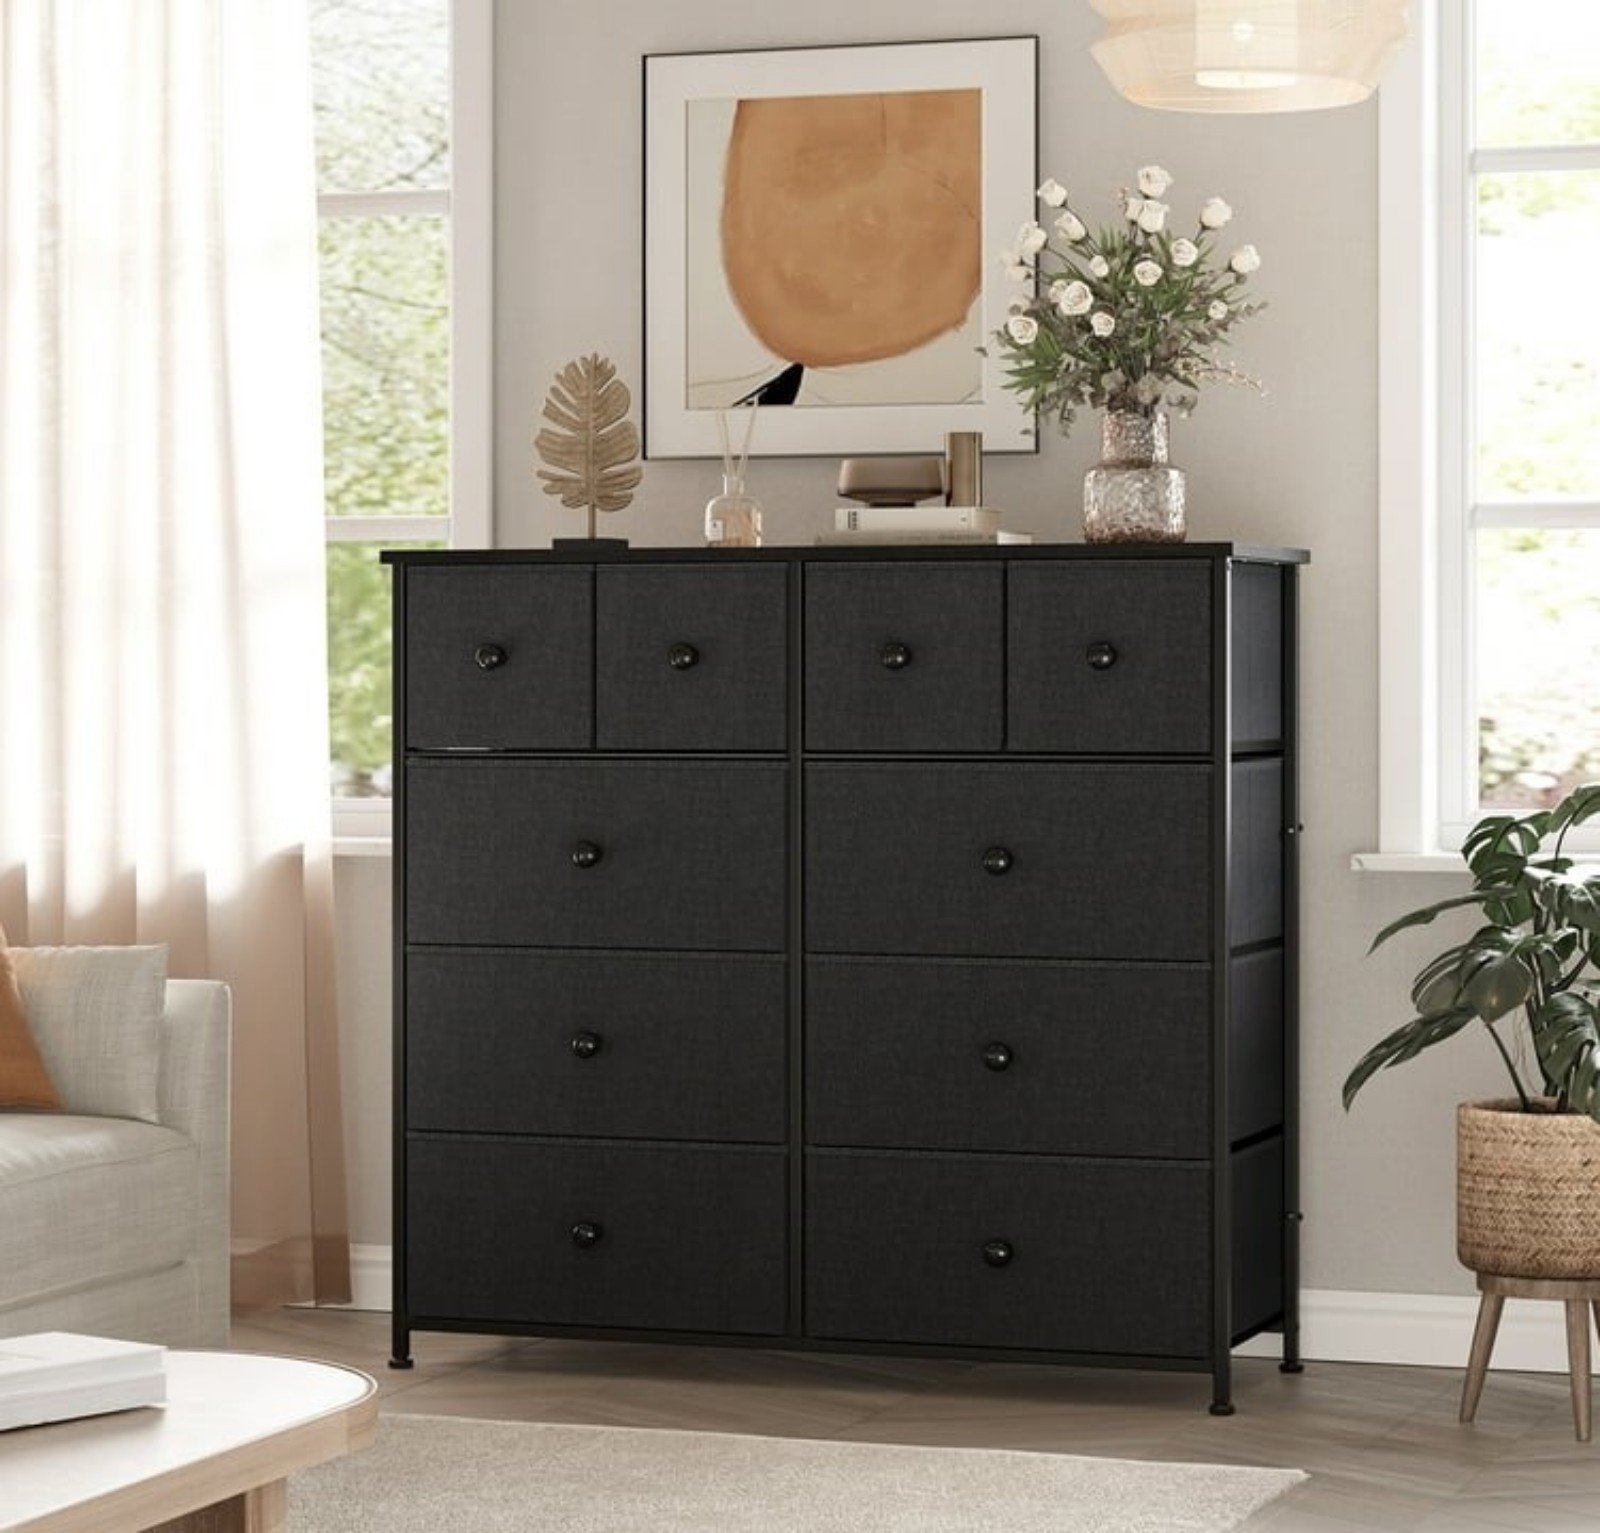 10 Drawer Dresser for Bedroom Fabric Storage Tower Black Dresser with Wood Top N6vcrdcWt